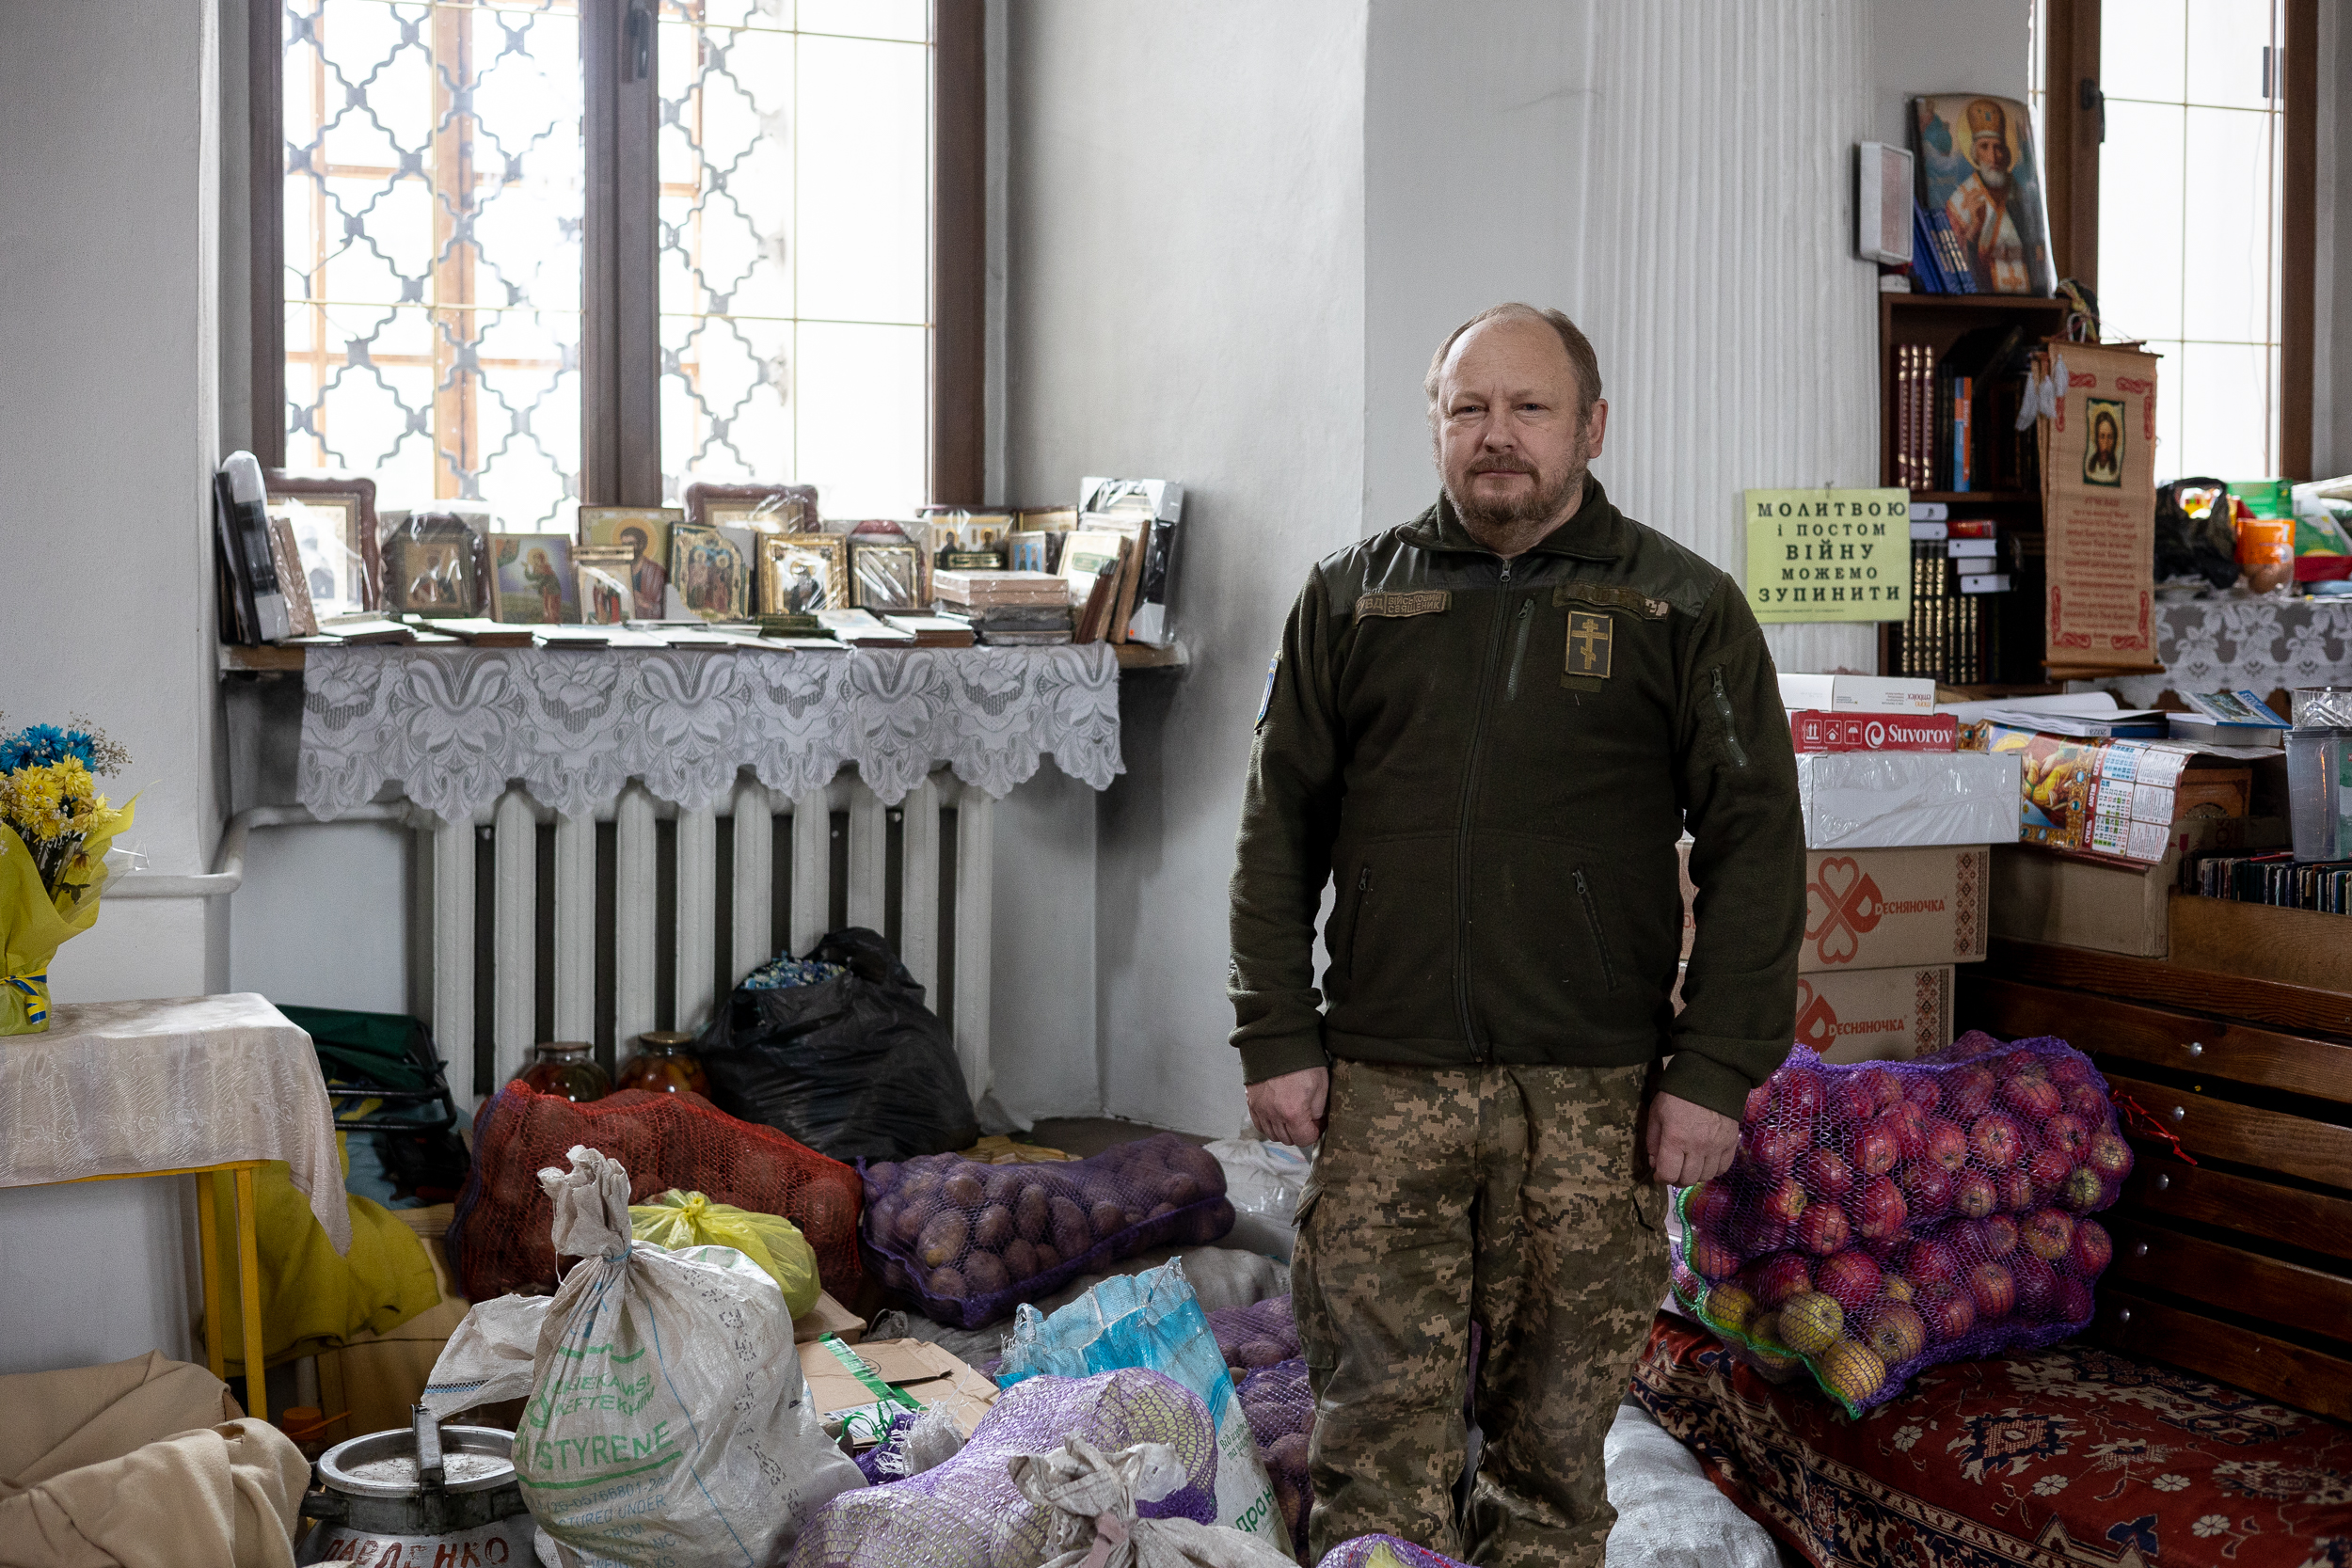 Serhiy Chechyn, chaplain and volunteer